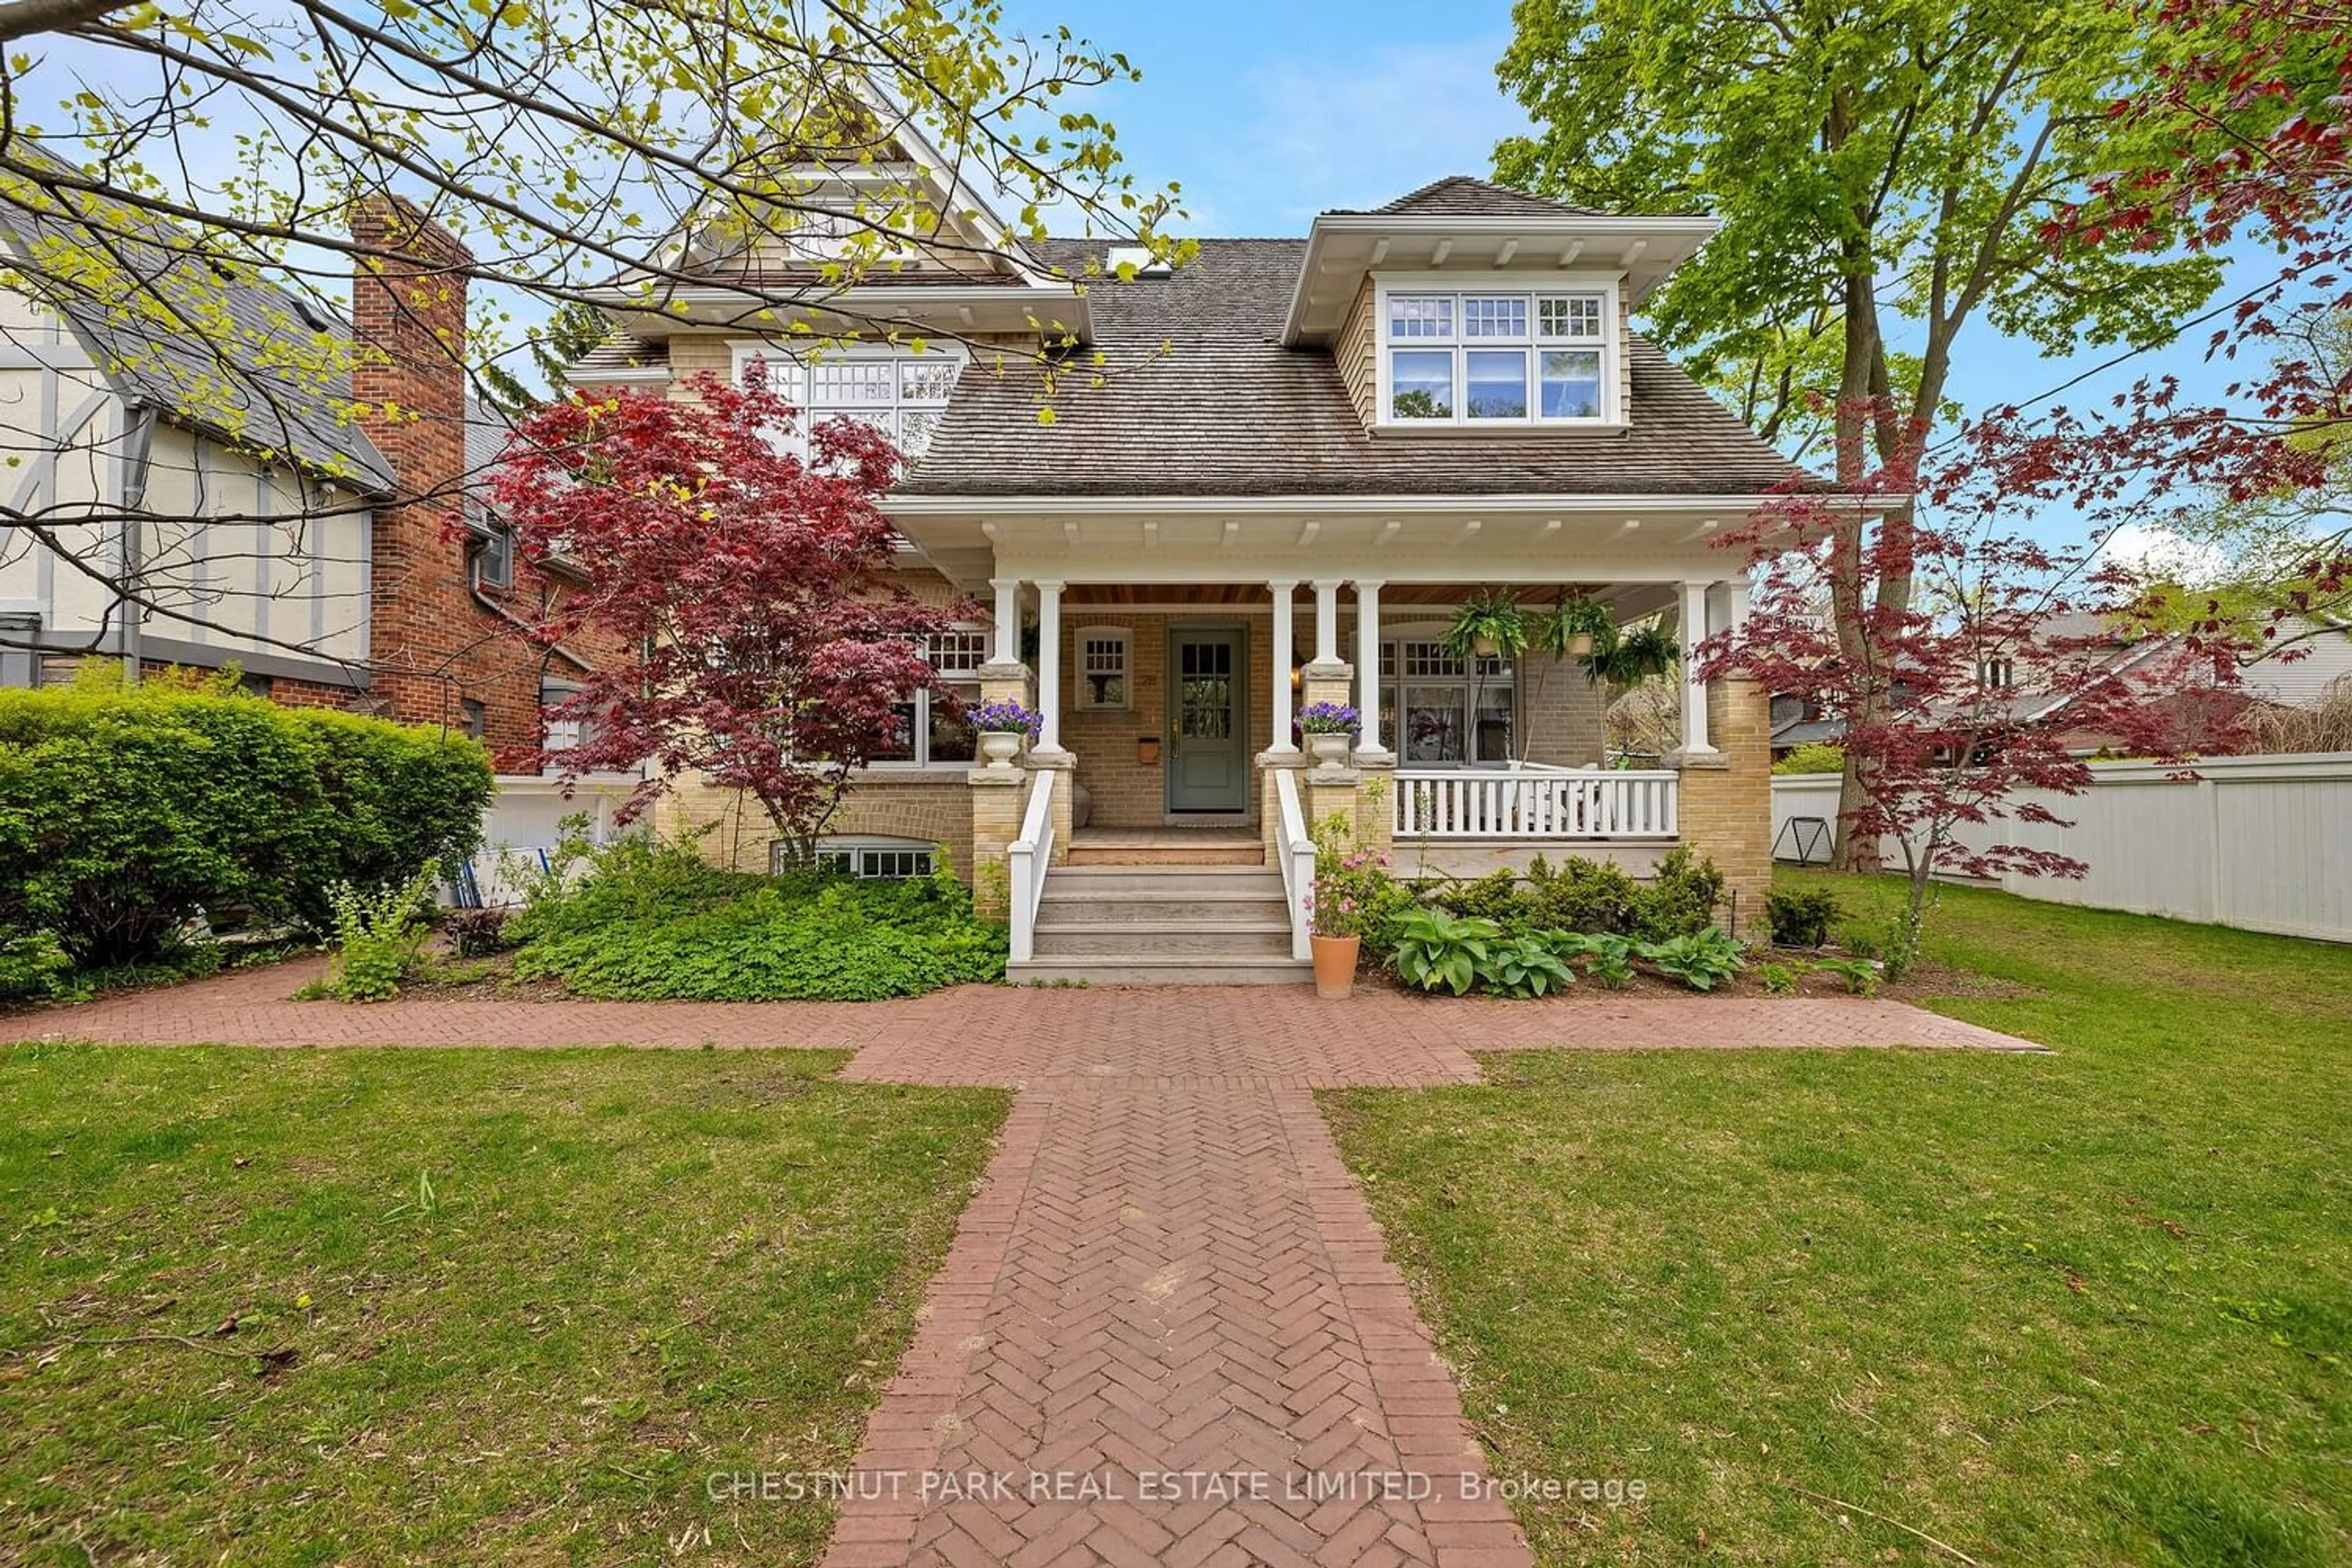 Home with brick exterior material for 28 Bracken Ave, Toronto Ontario M4E 1N3